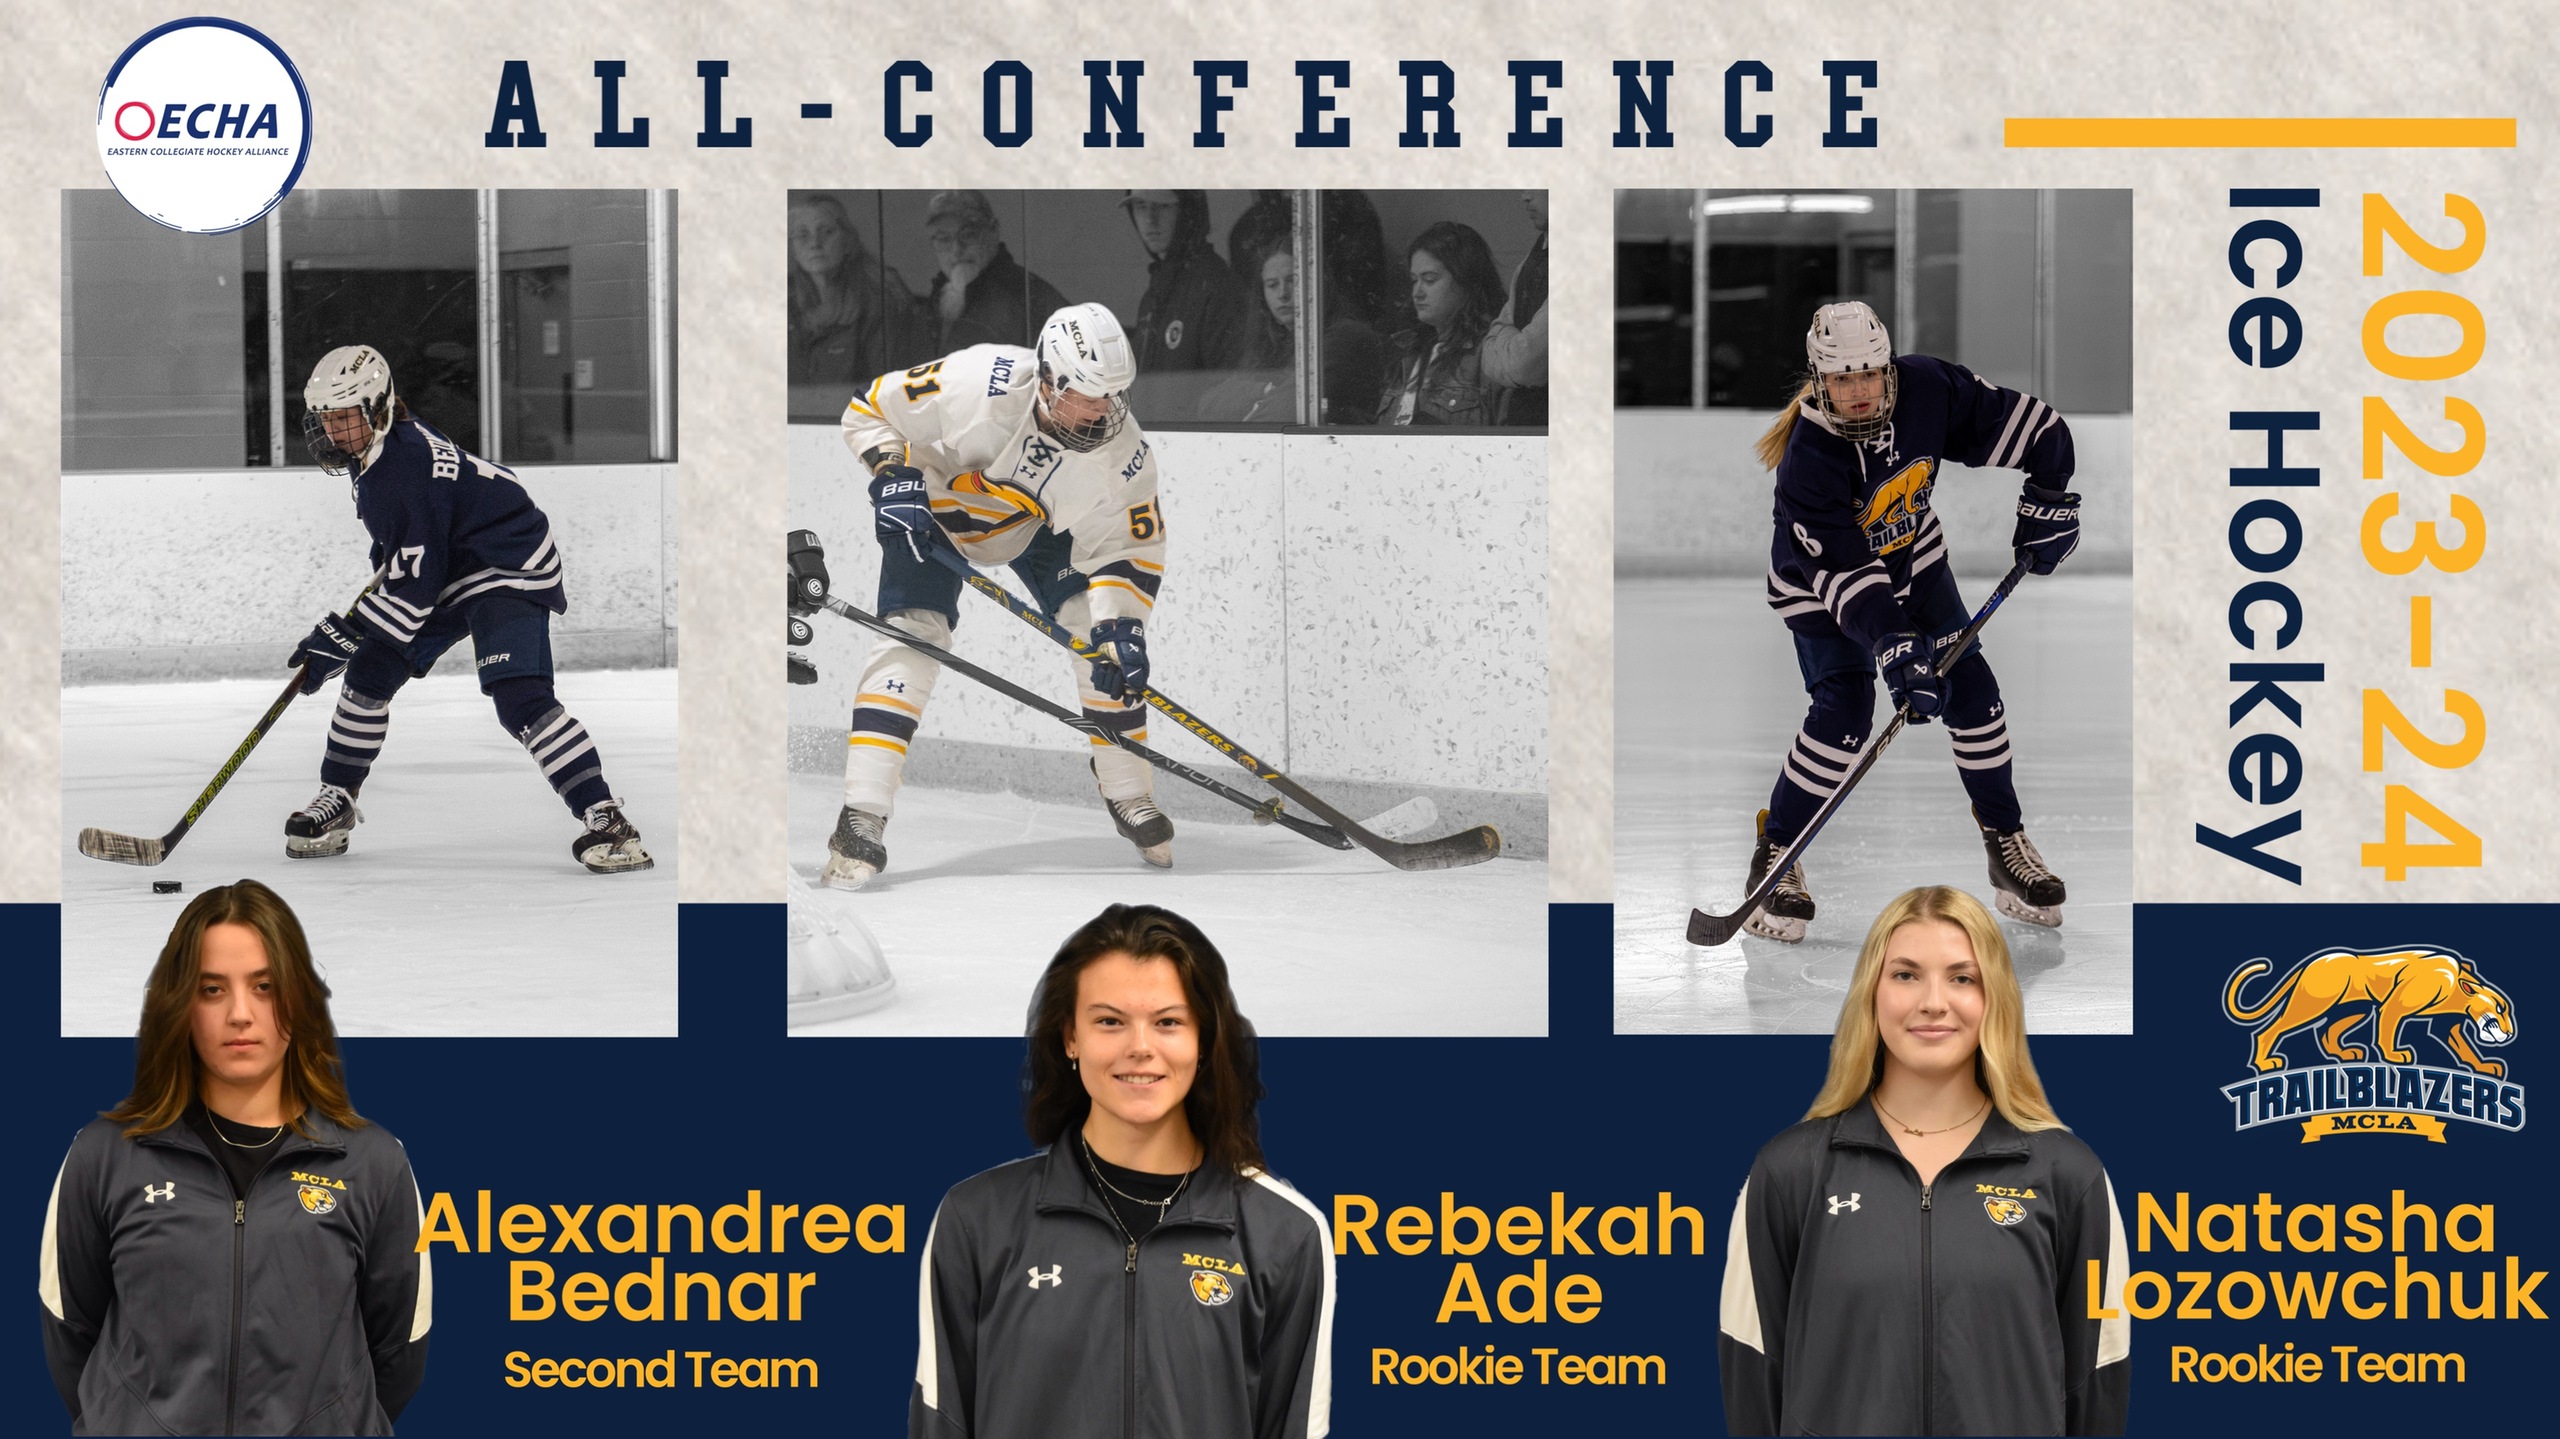 Three Women's Ice Hockey players earn All-ECHA honors